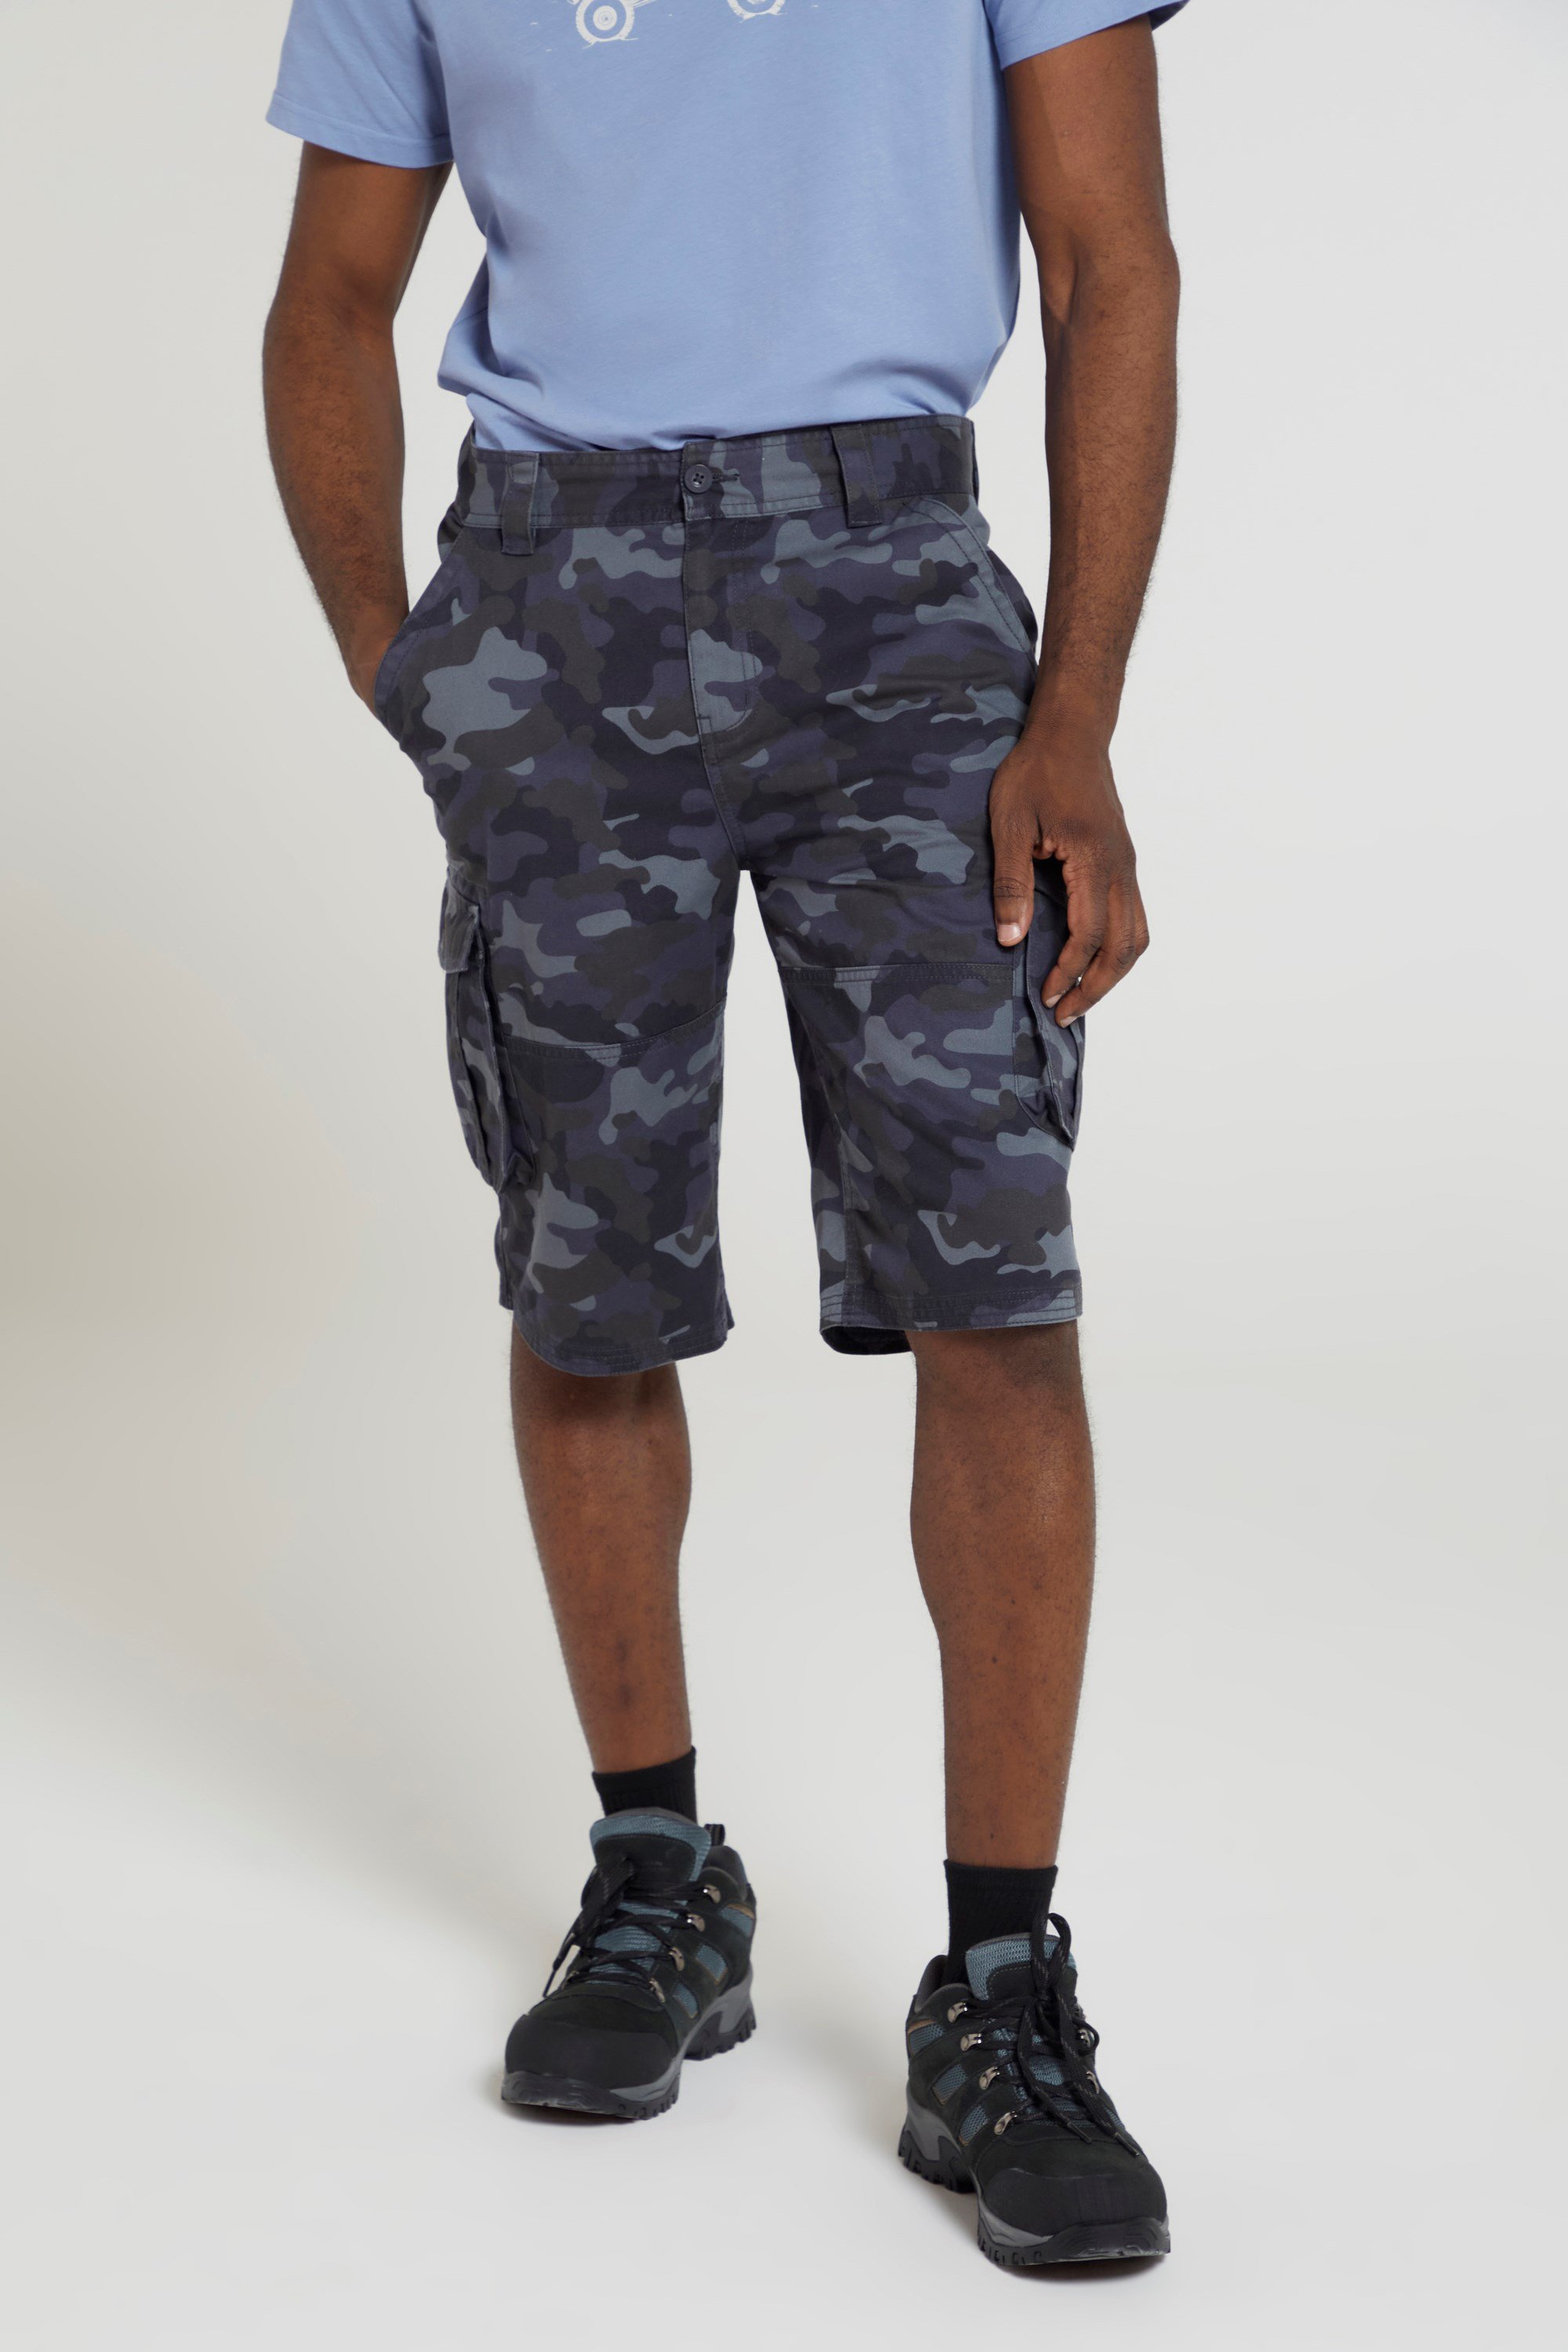 AOYOG Men's Camo Cargo Shorts Relaxed Fit Multi-Pocket Outdoor Camouflage  Cargo Shorts Cotton